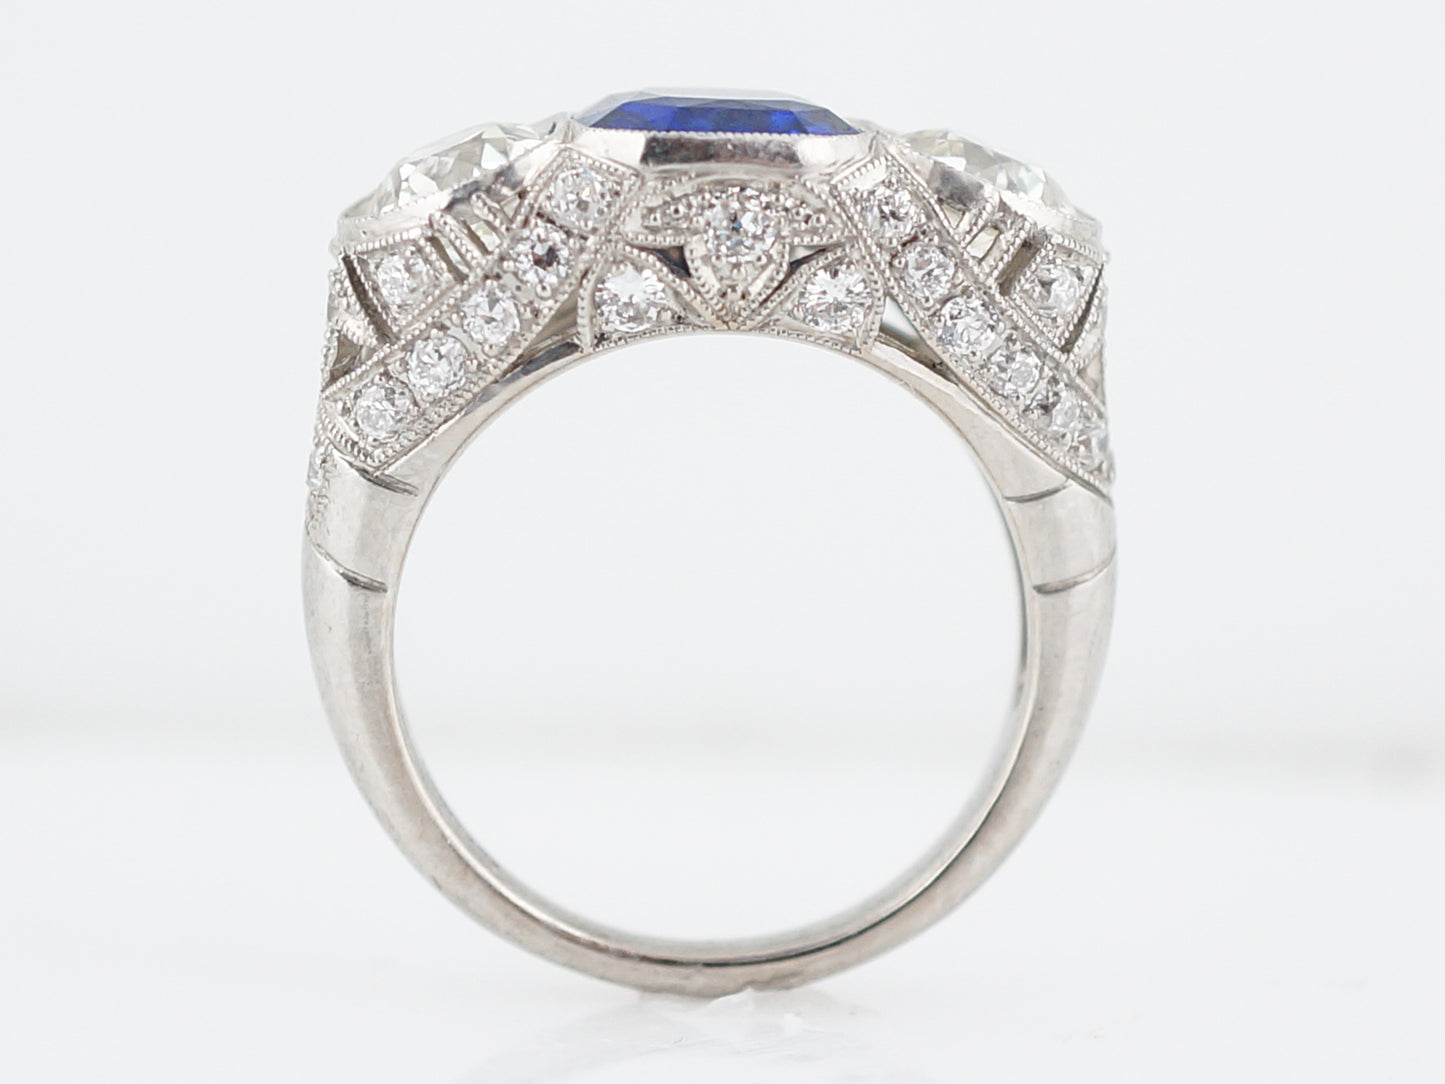 Antique Right Hand Ring Tiffany & Co Art Deco 2.16 Cushion Cut Sapphire & 1.94 old European Cut Diamonds in Platinum